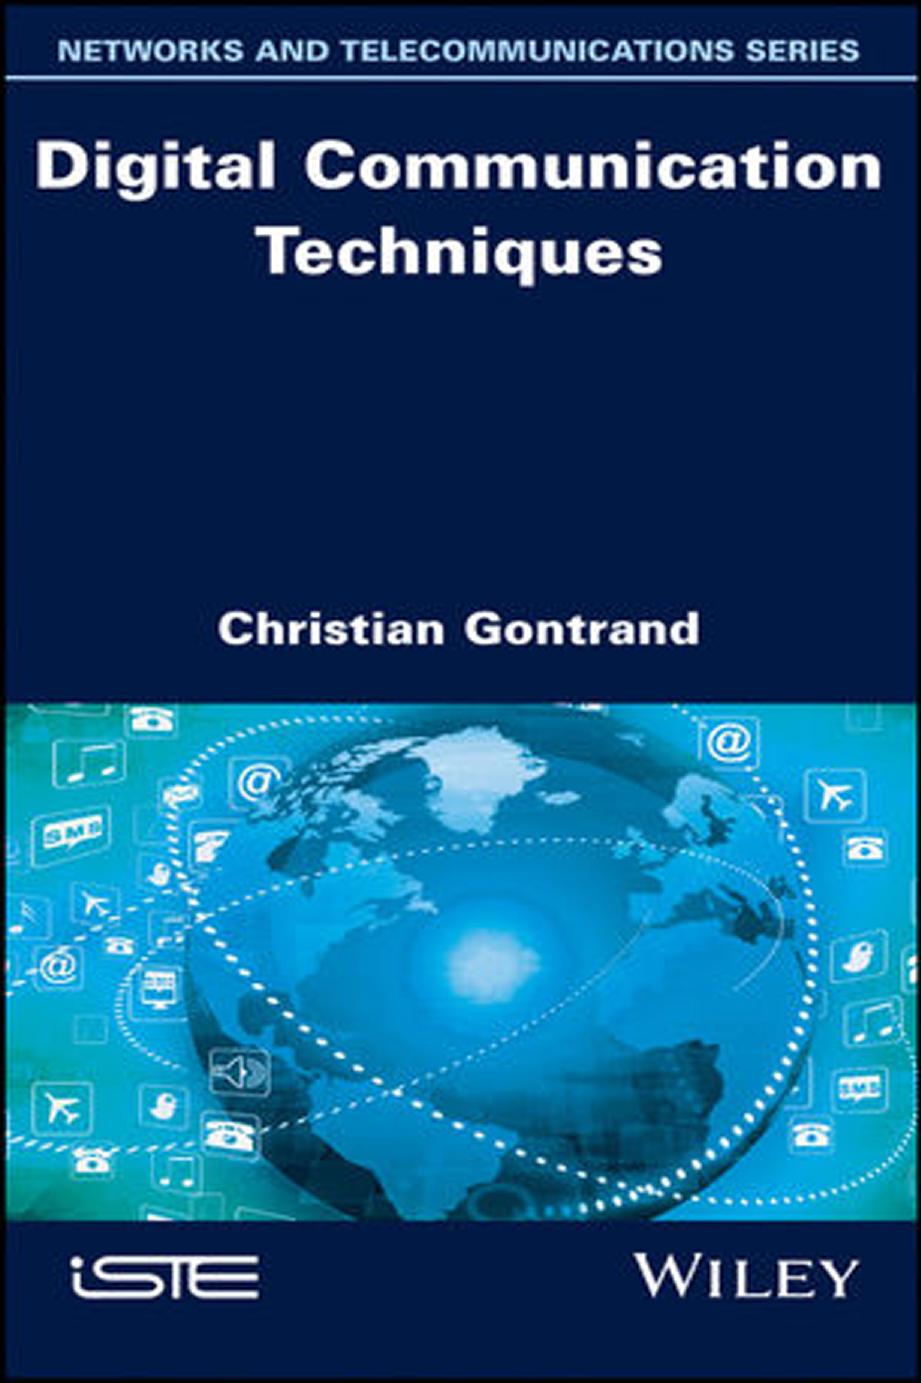 Digital Communication Techniques by Christian Gontrand